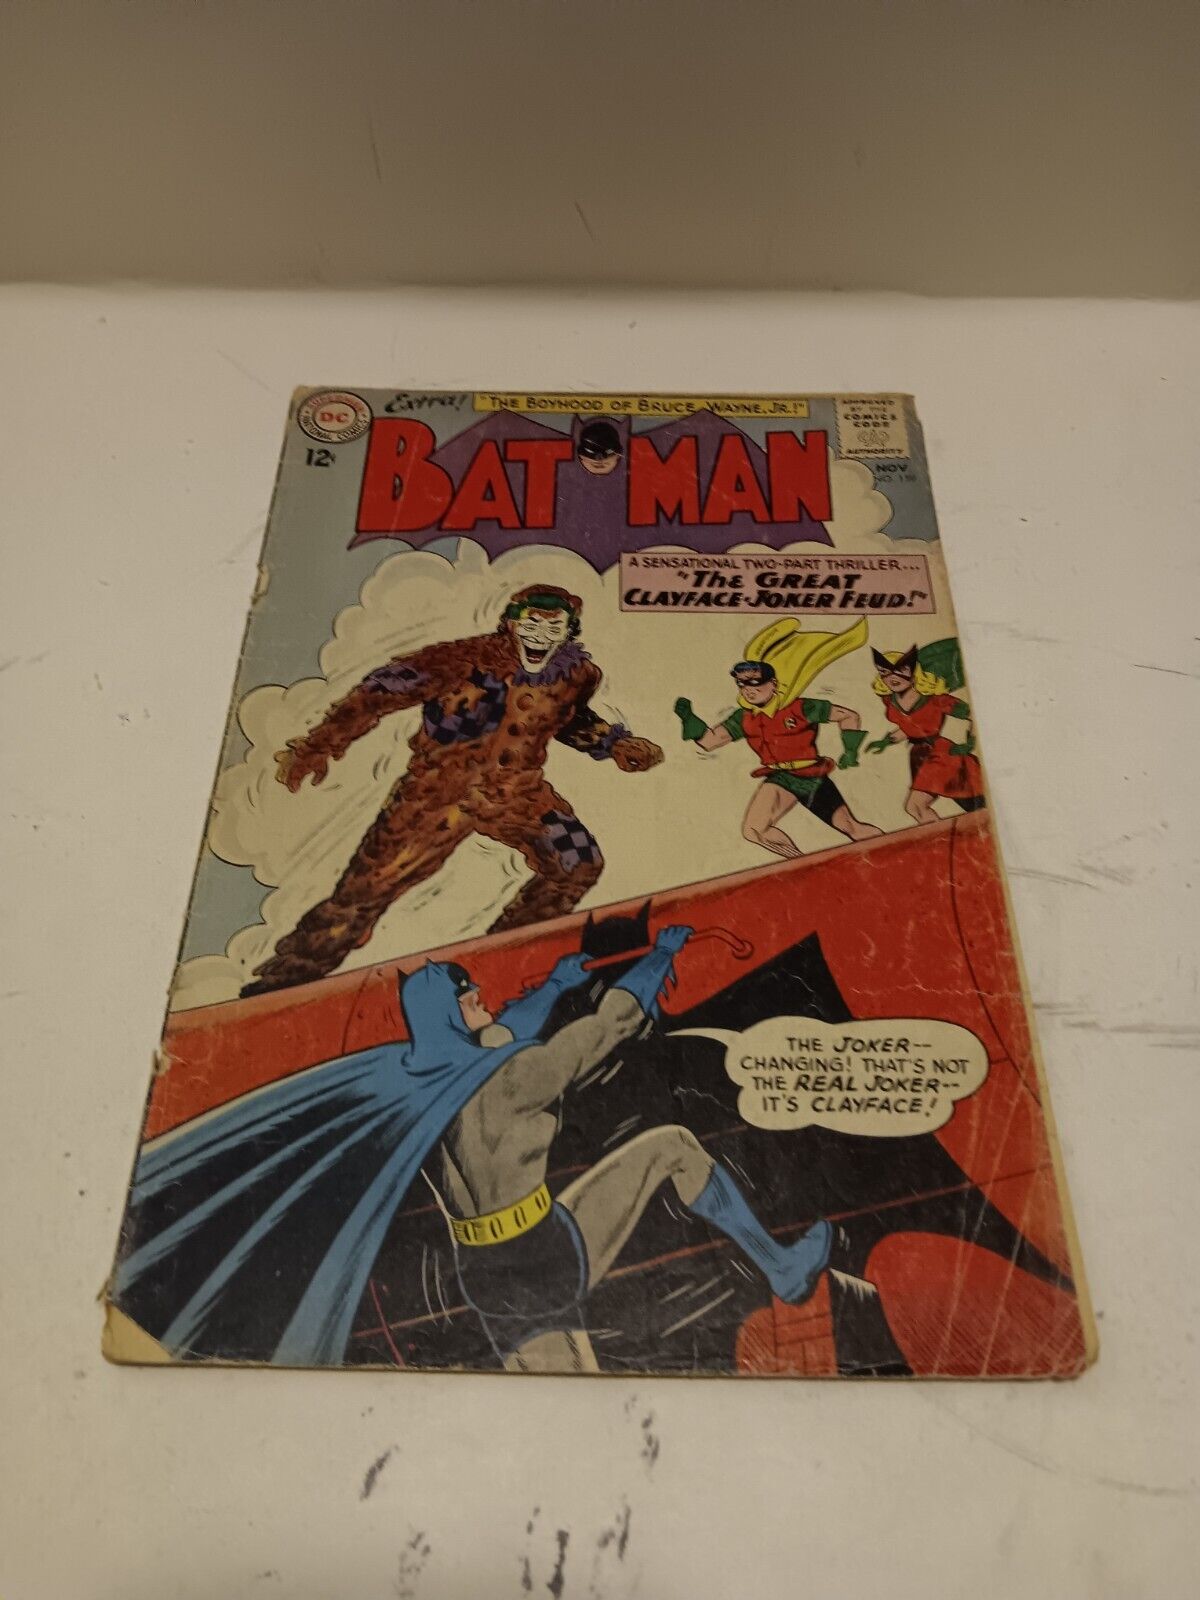 BATMAN #159 The Great Clayface-Joker Feud DC Comic Book 